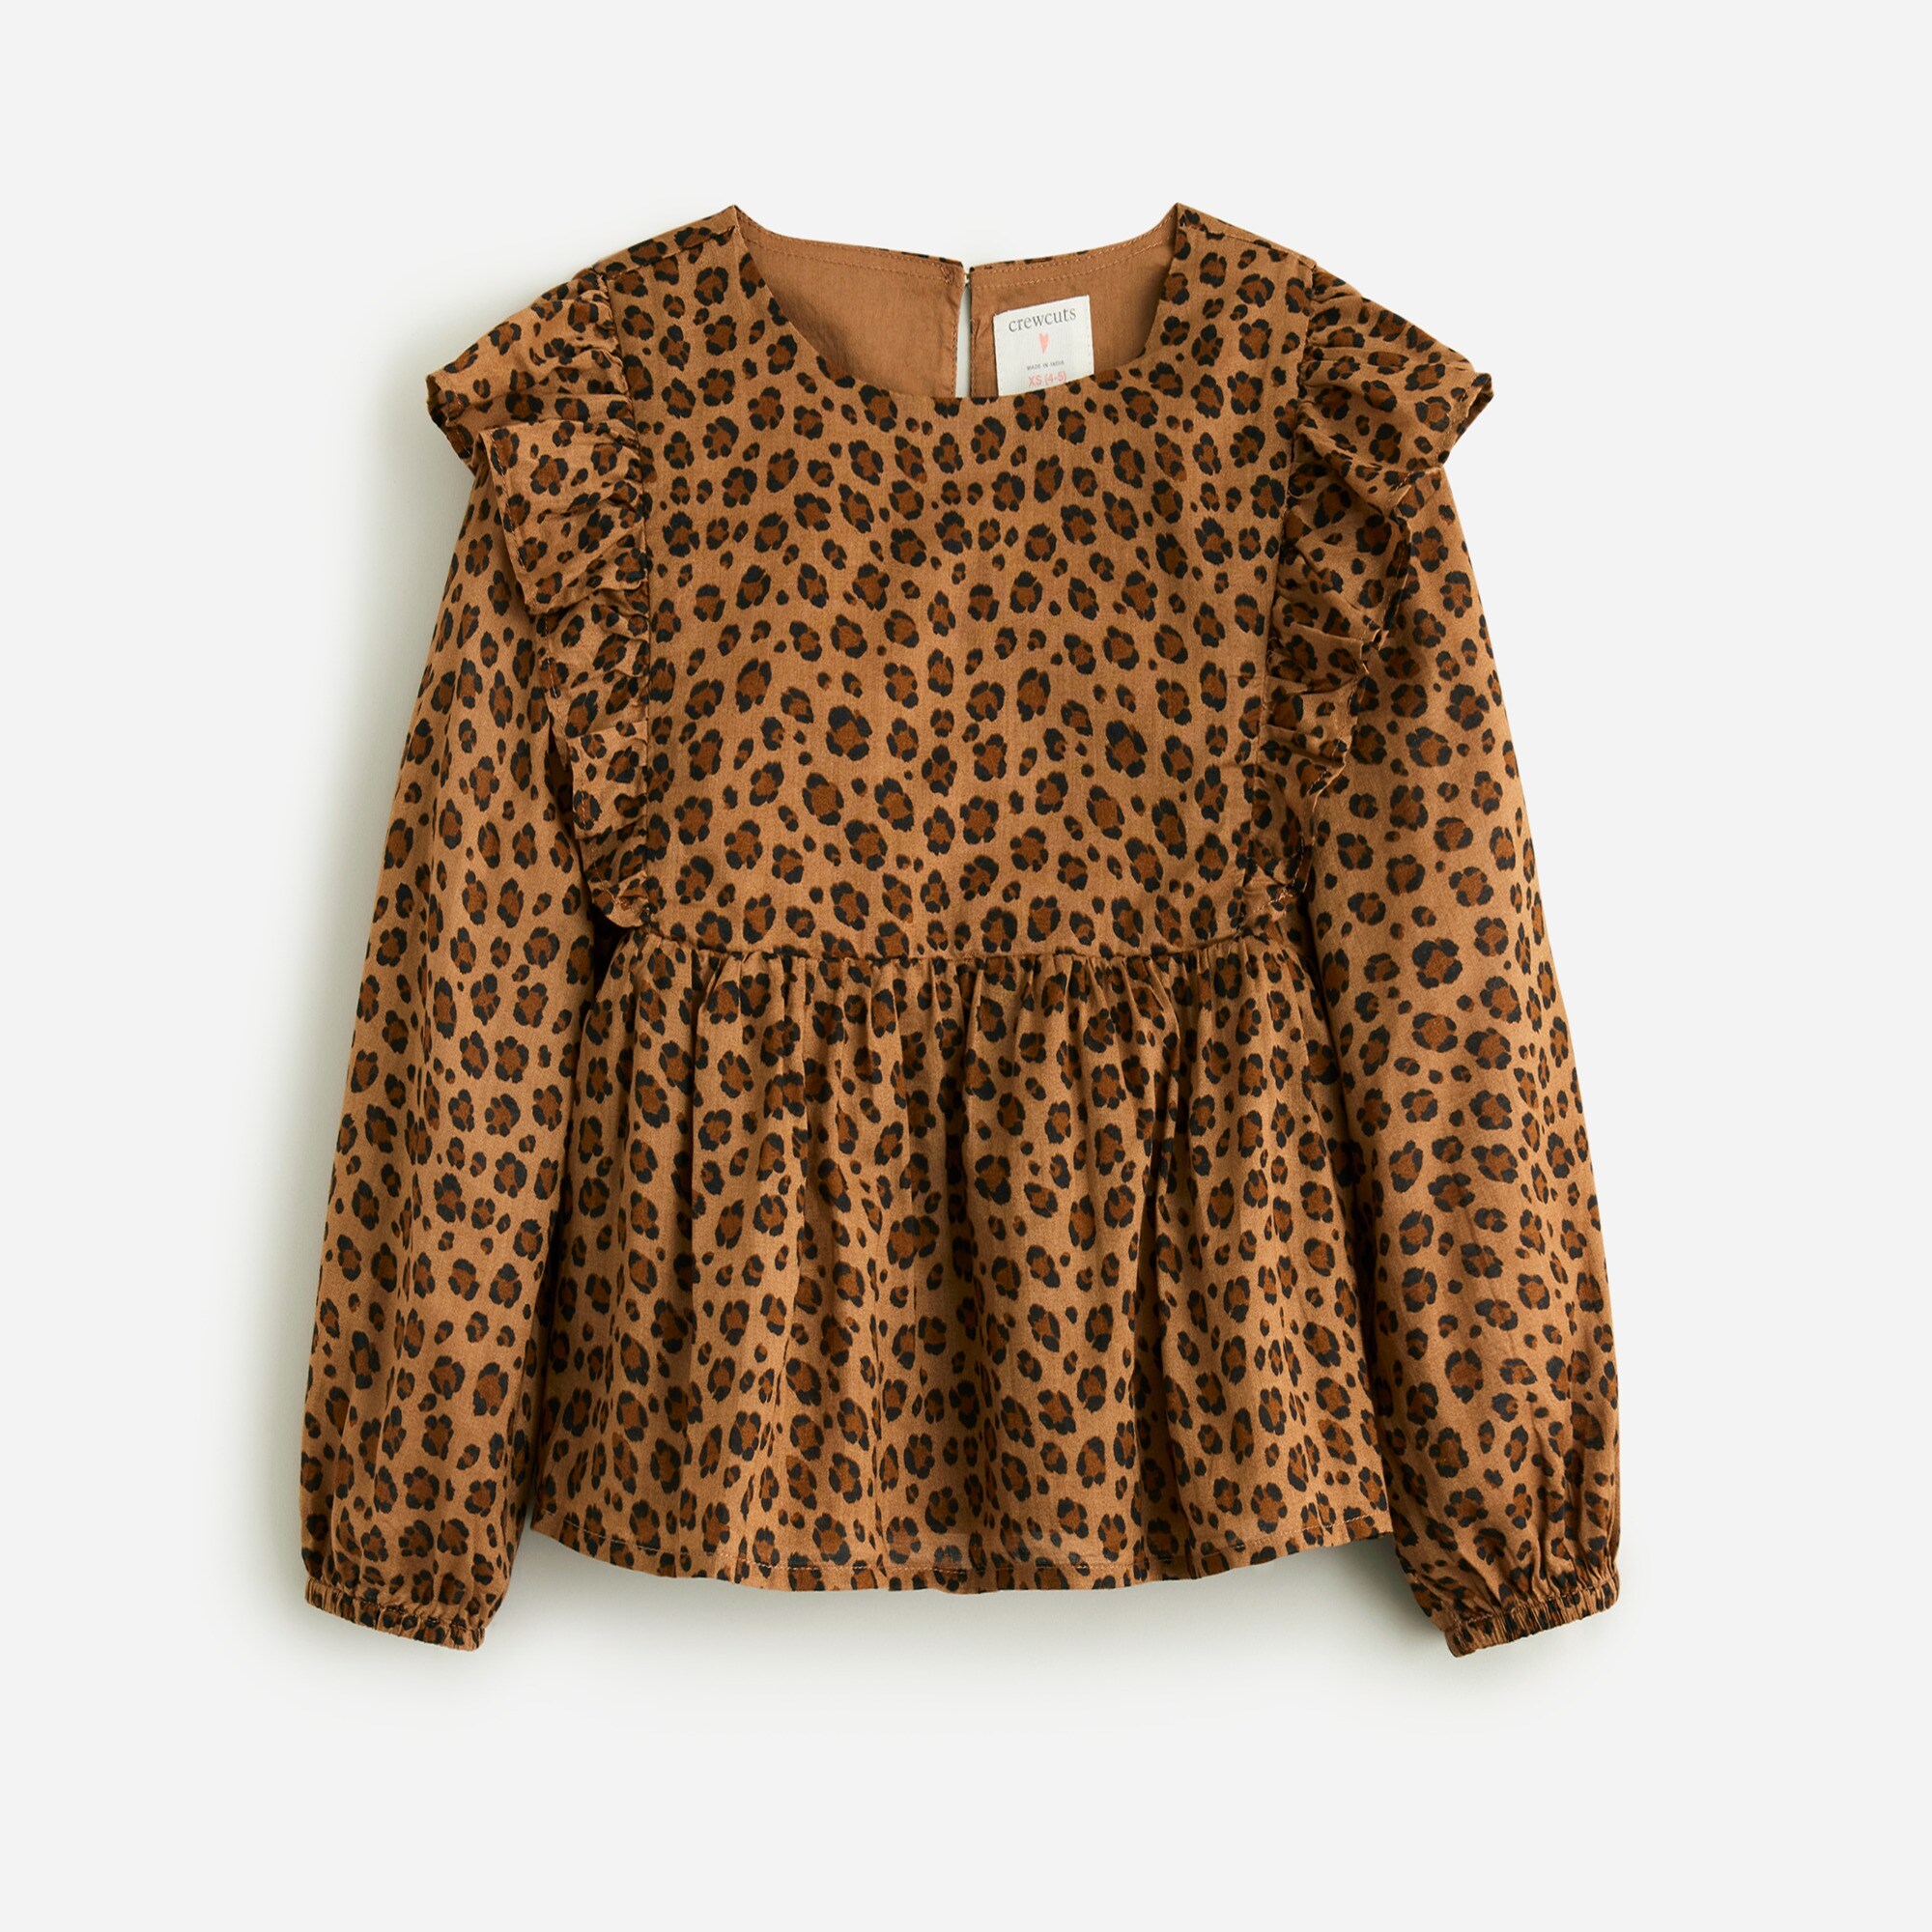  Girls' ruffle-shoulder puff-sleeve top in leopard print